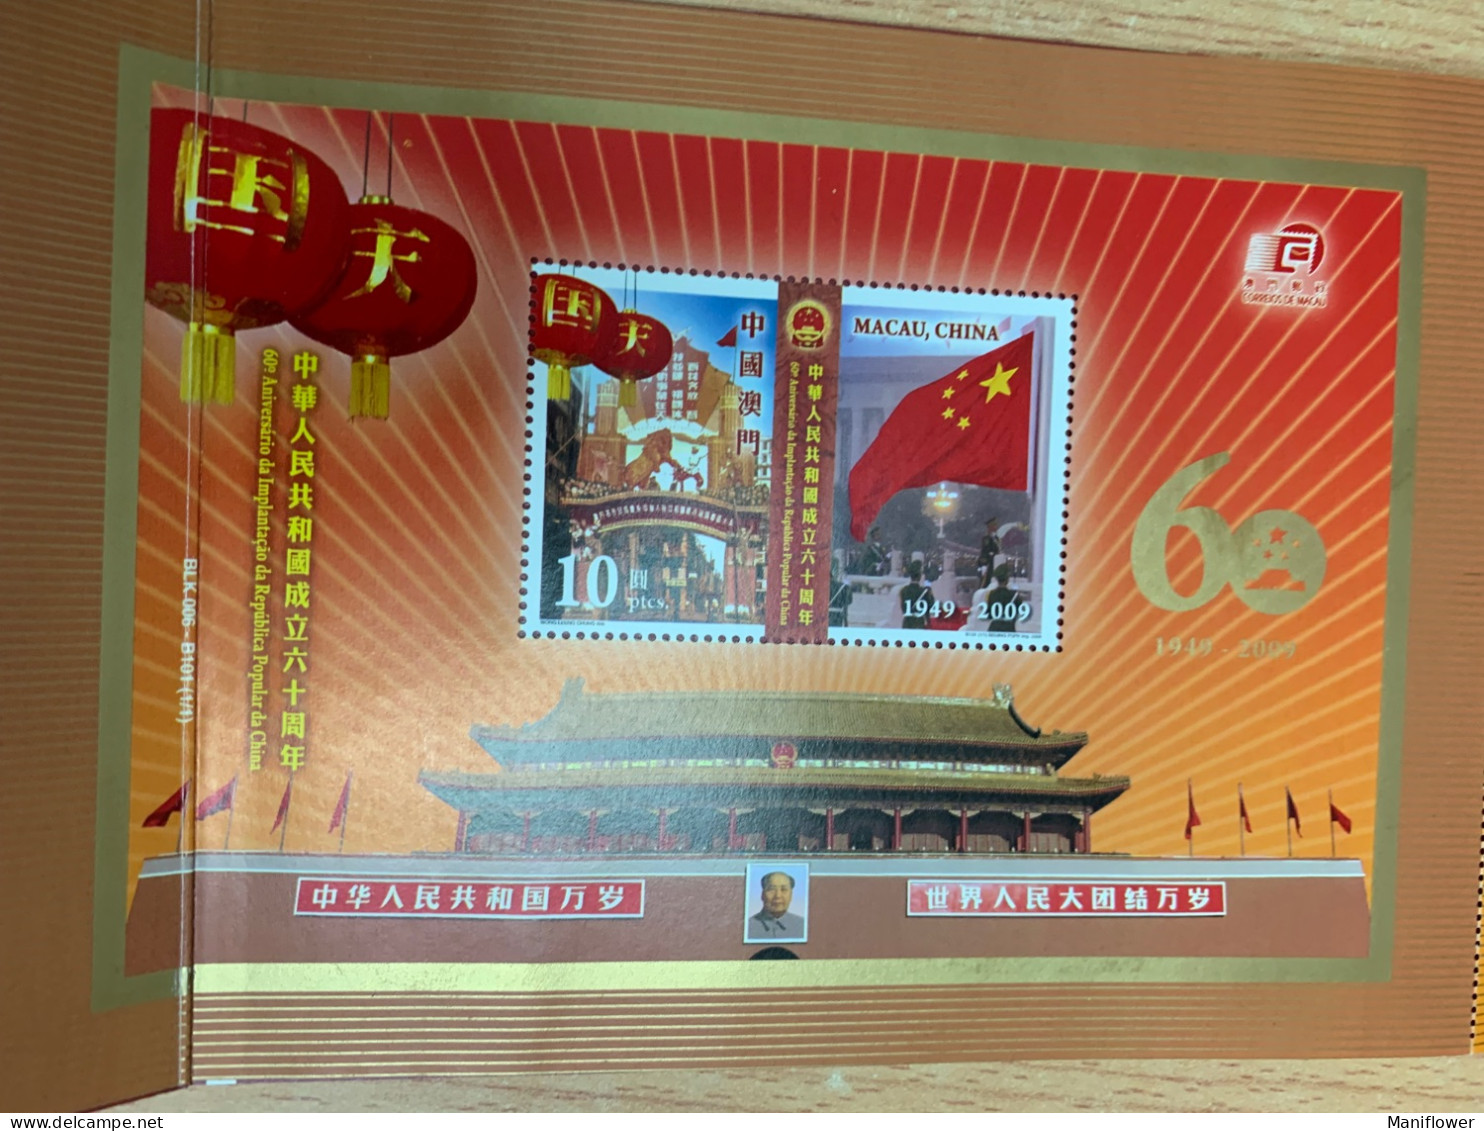 Hong Kong Stamp China Macau Three Regions Flags Emblem Folder MNH 2009 Temple - Unused Stamps